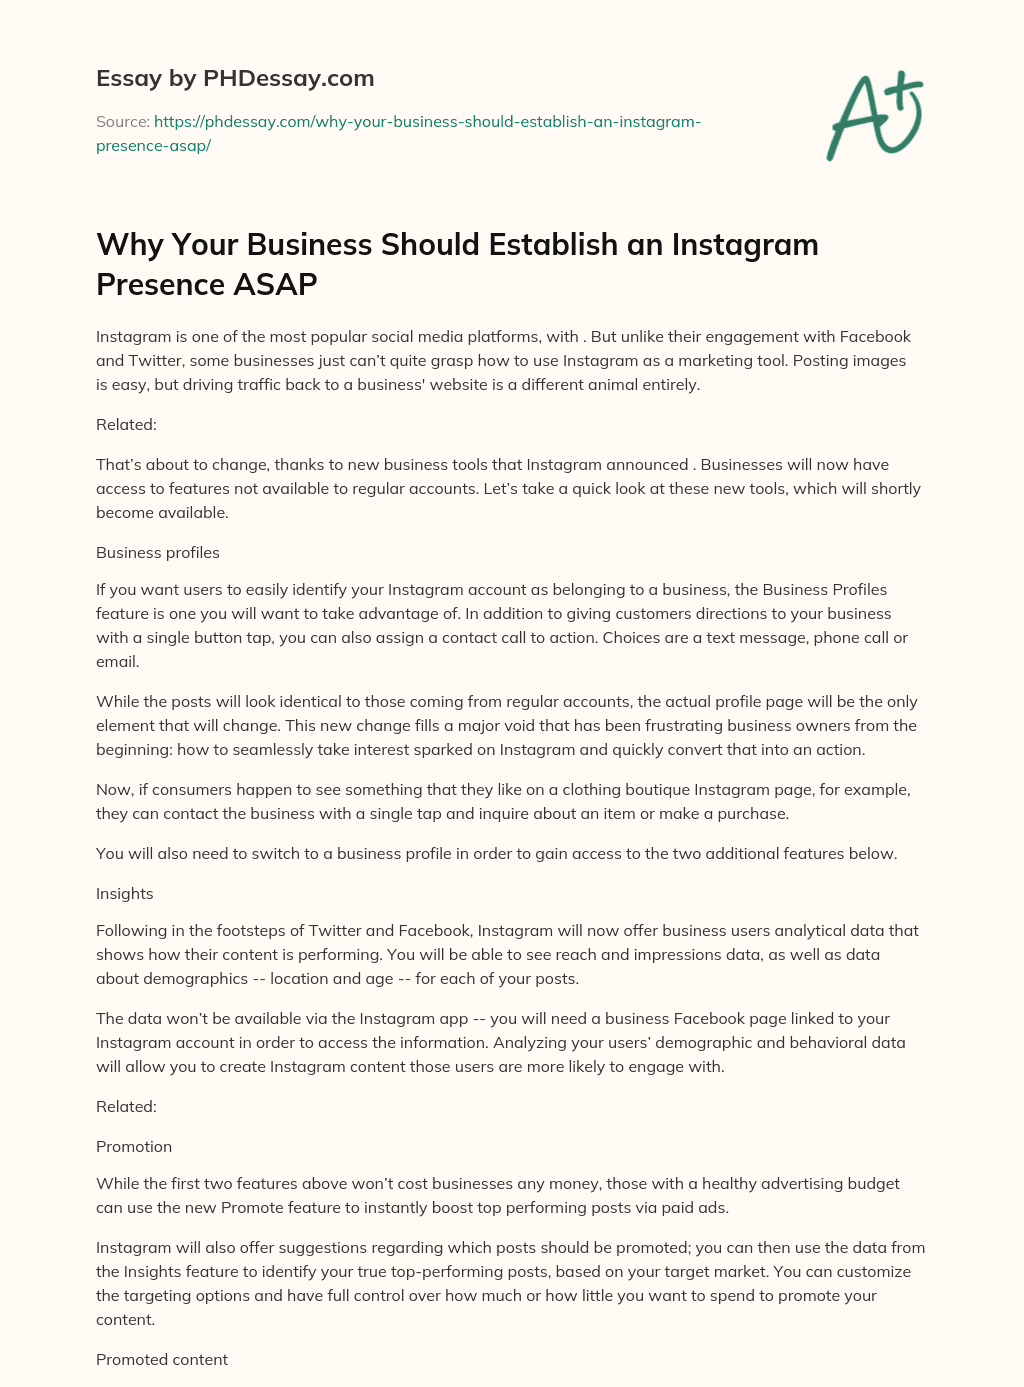 Why Your Business Should Establish an Instagram Presence ASAP essay